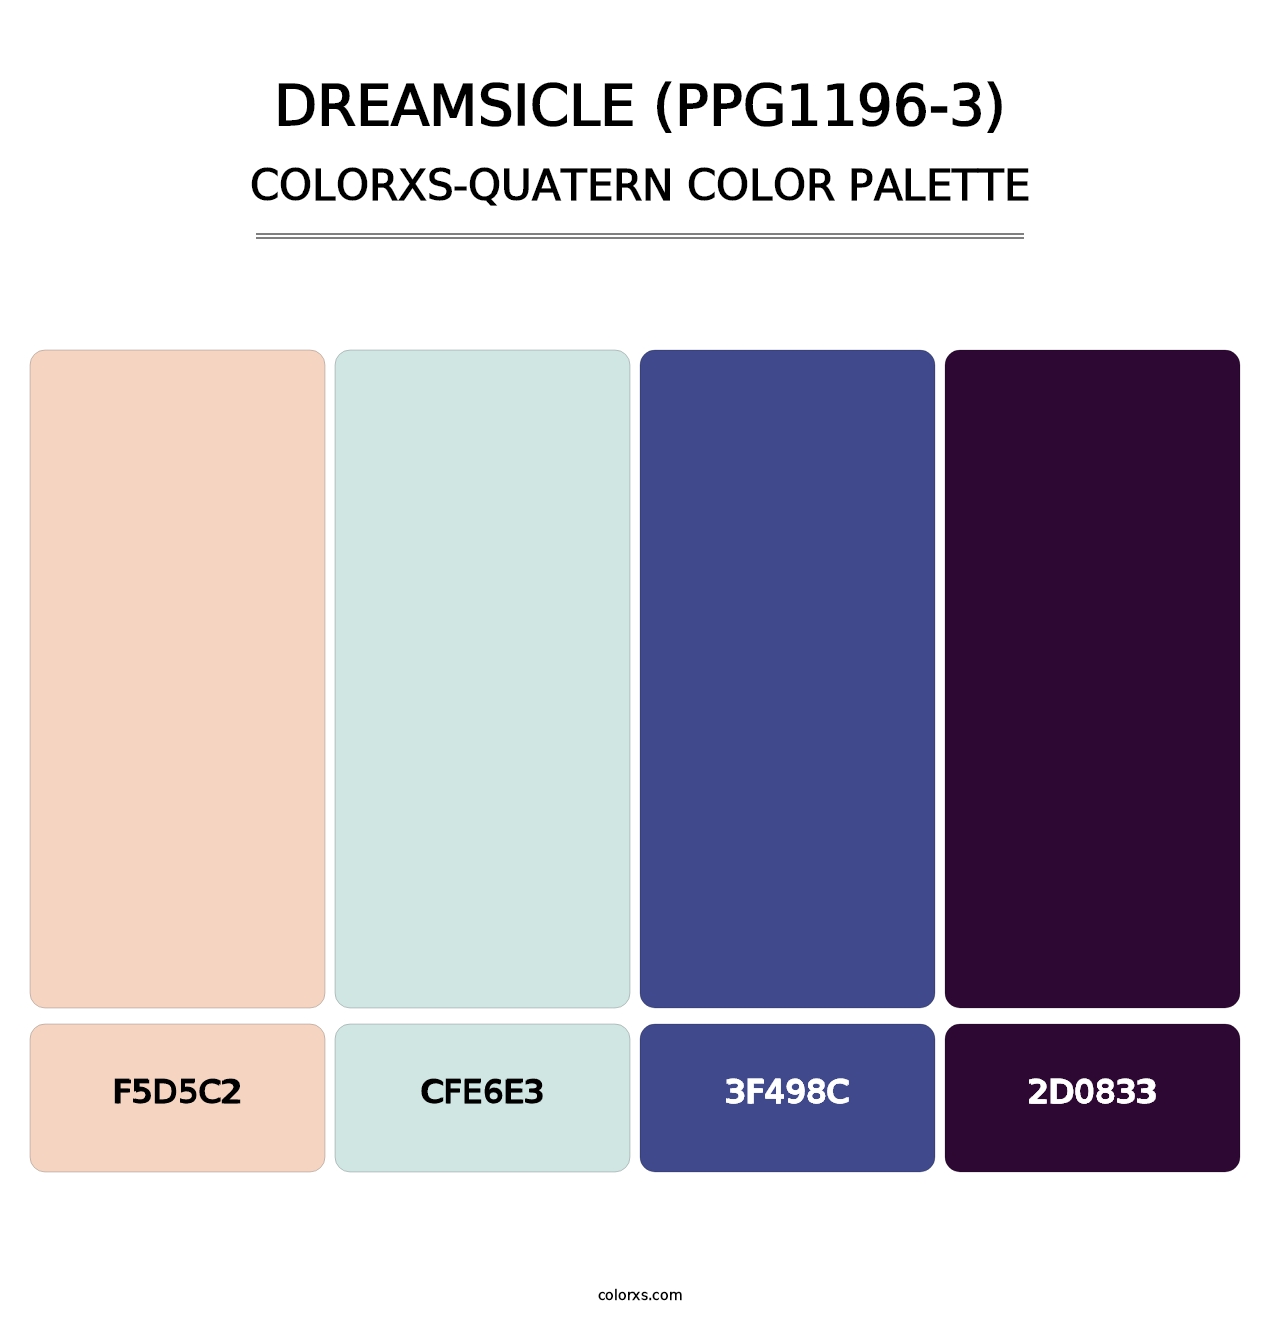 Dreamsicle (PPG1196-3) - Colorxs Quatern Palette